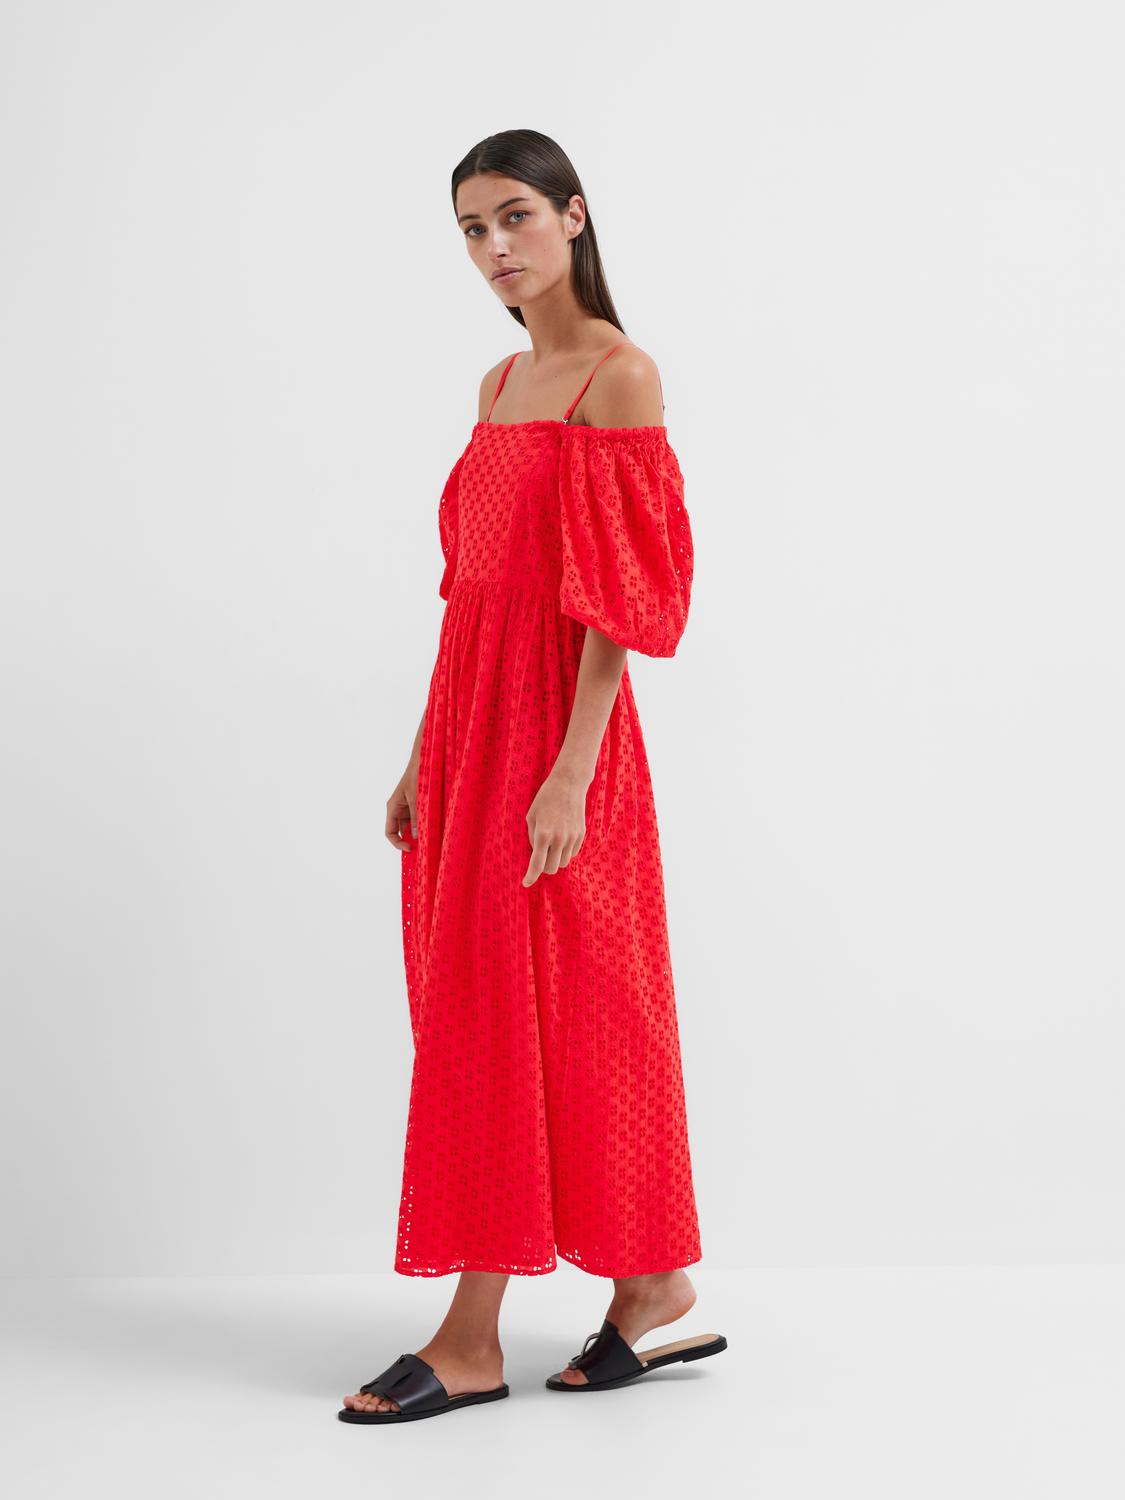 SLFANELLI Dress - Flame Scarlet